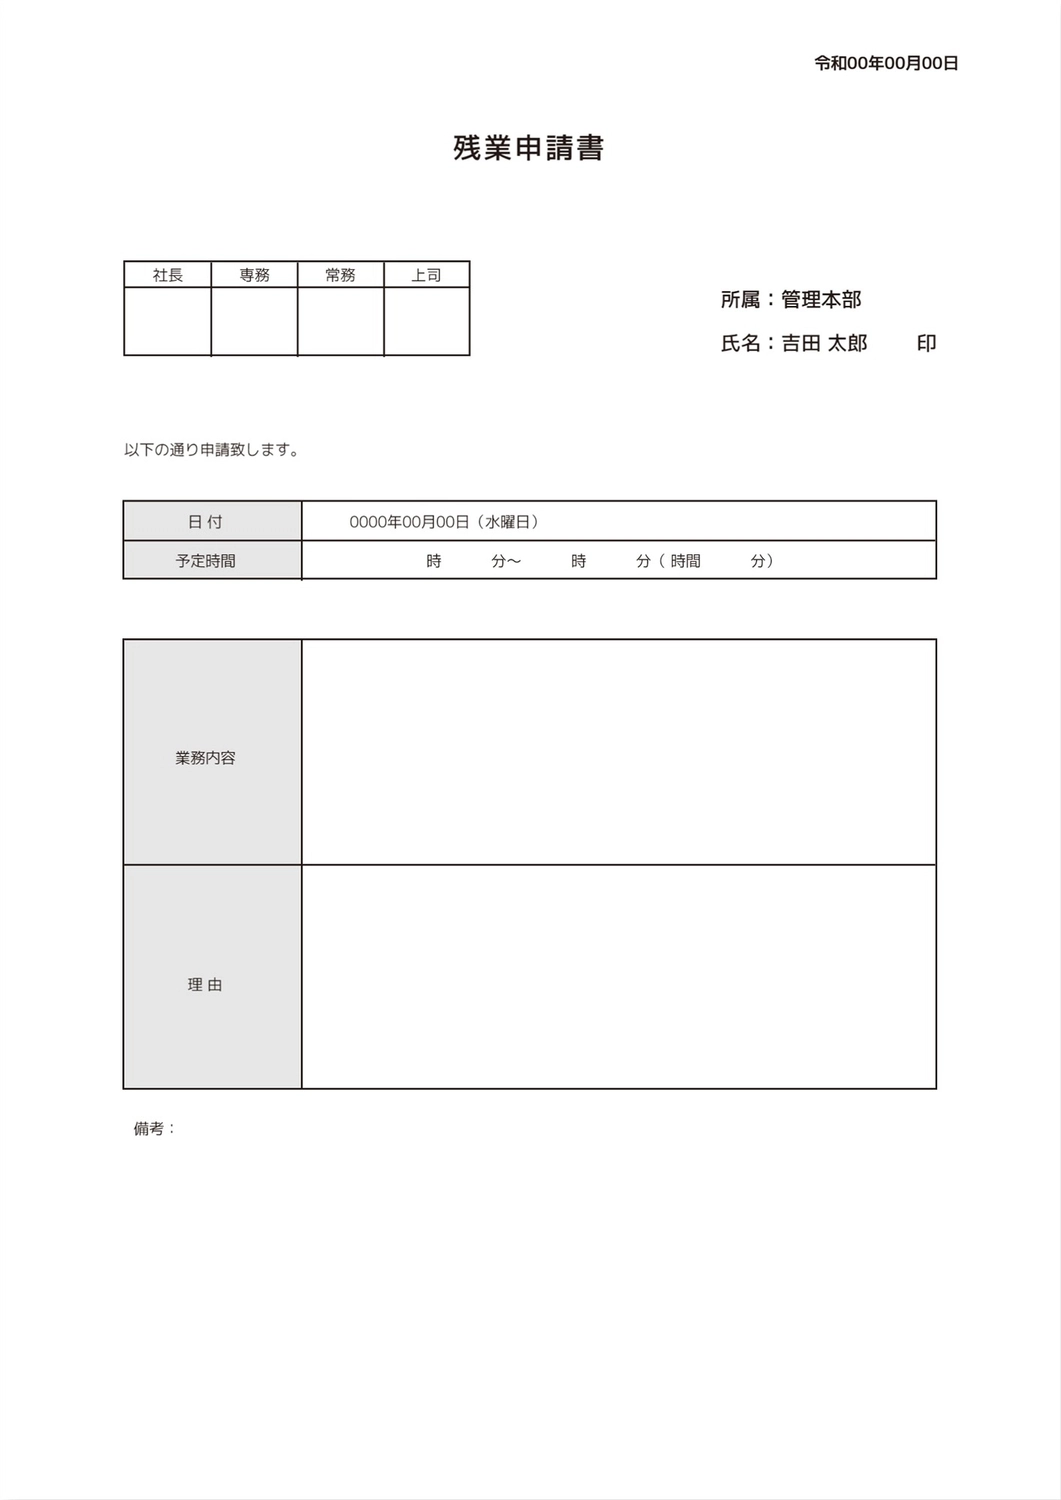 残業申請書テンプレート, giản dị, in ấn, tạo ra, Tài liệu A4 mẫu